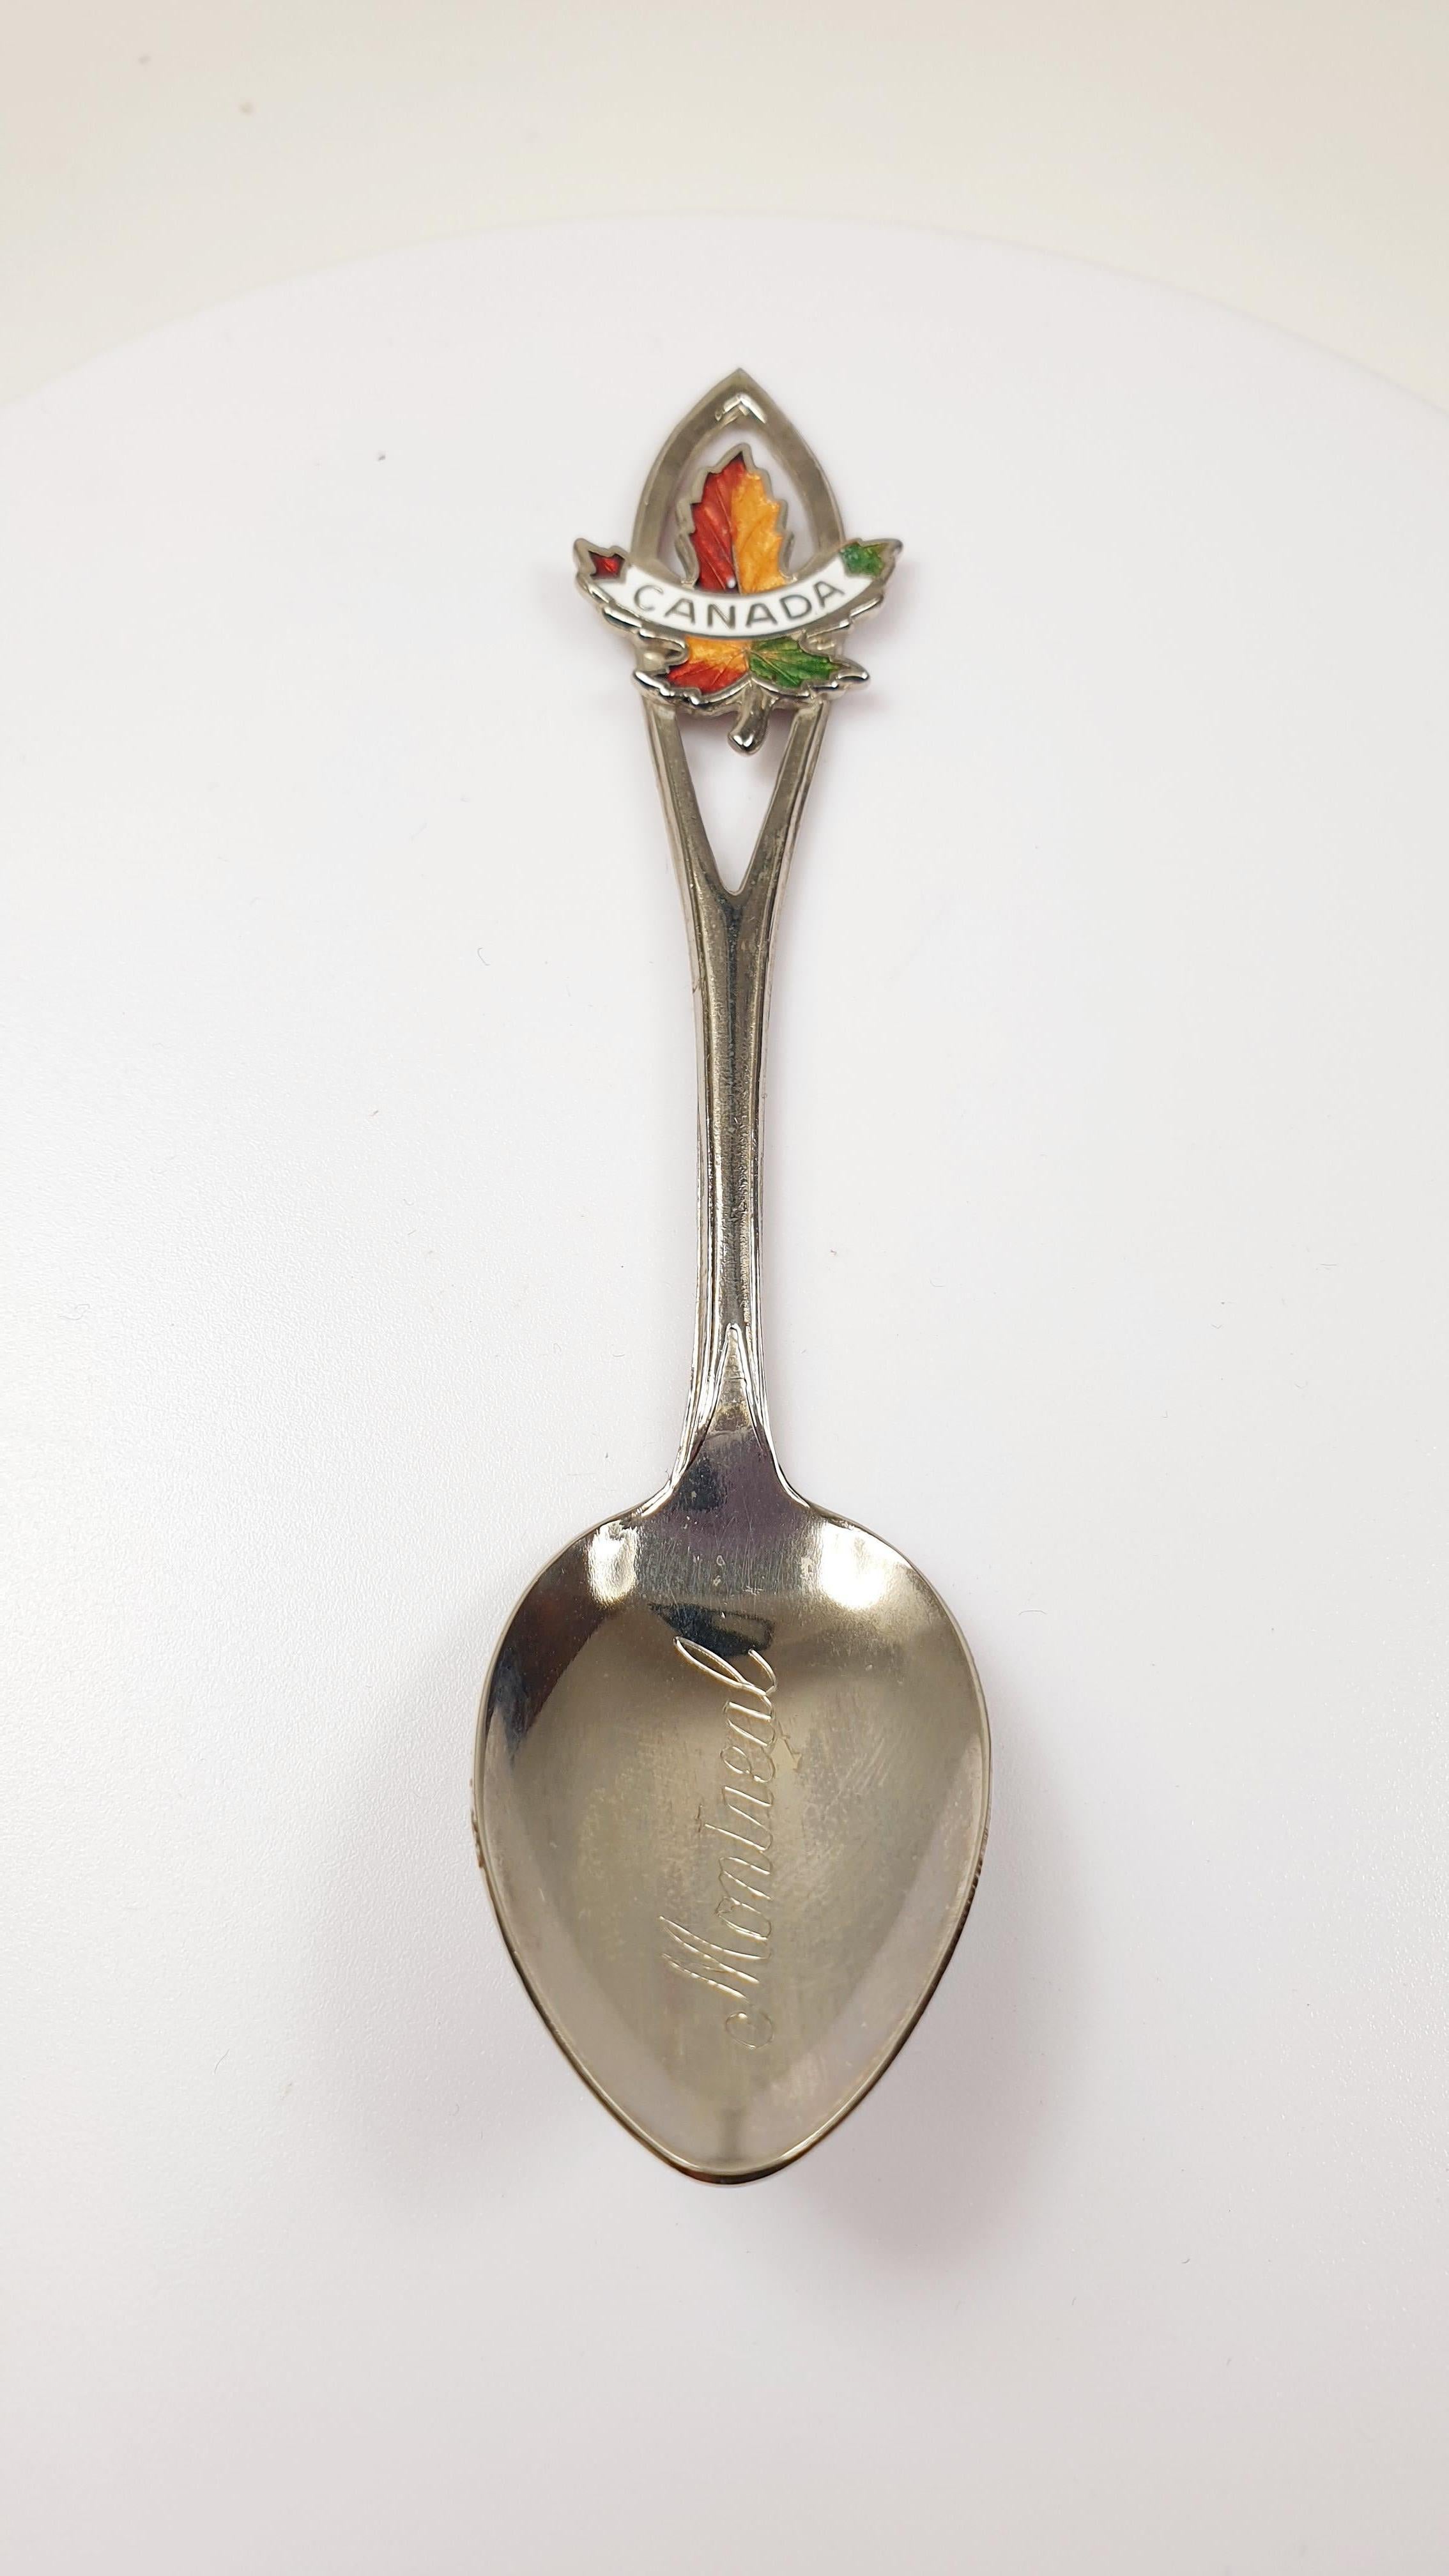 Montreal Canada collectors souvenir Silver Teaspoon 